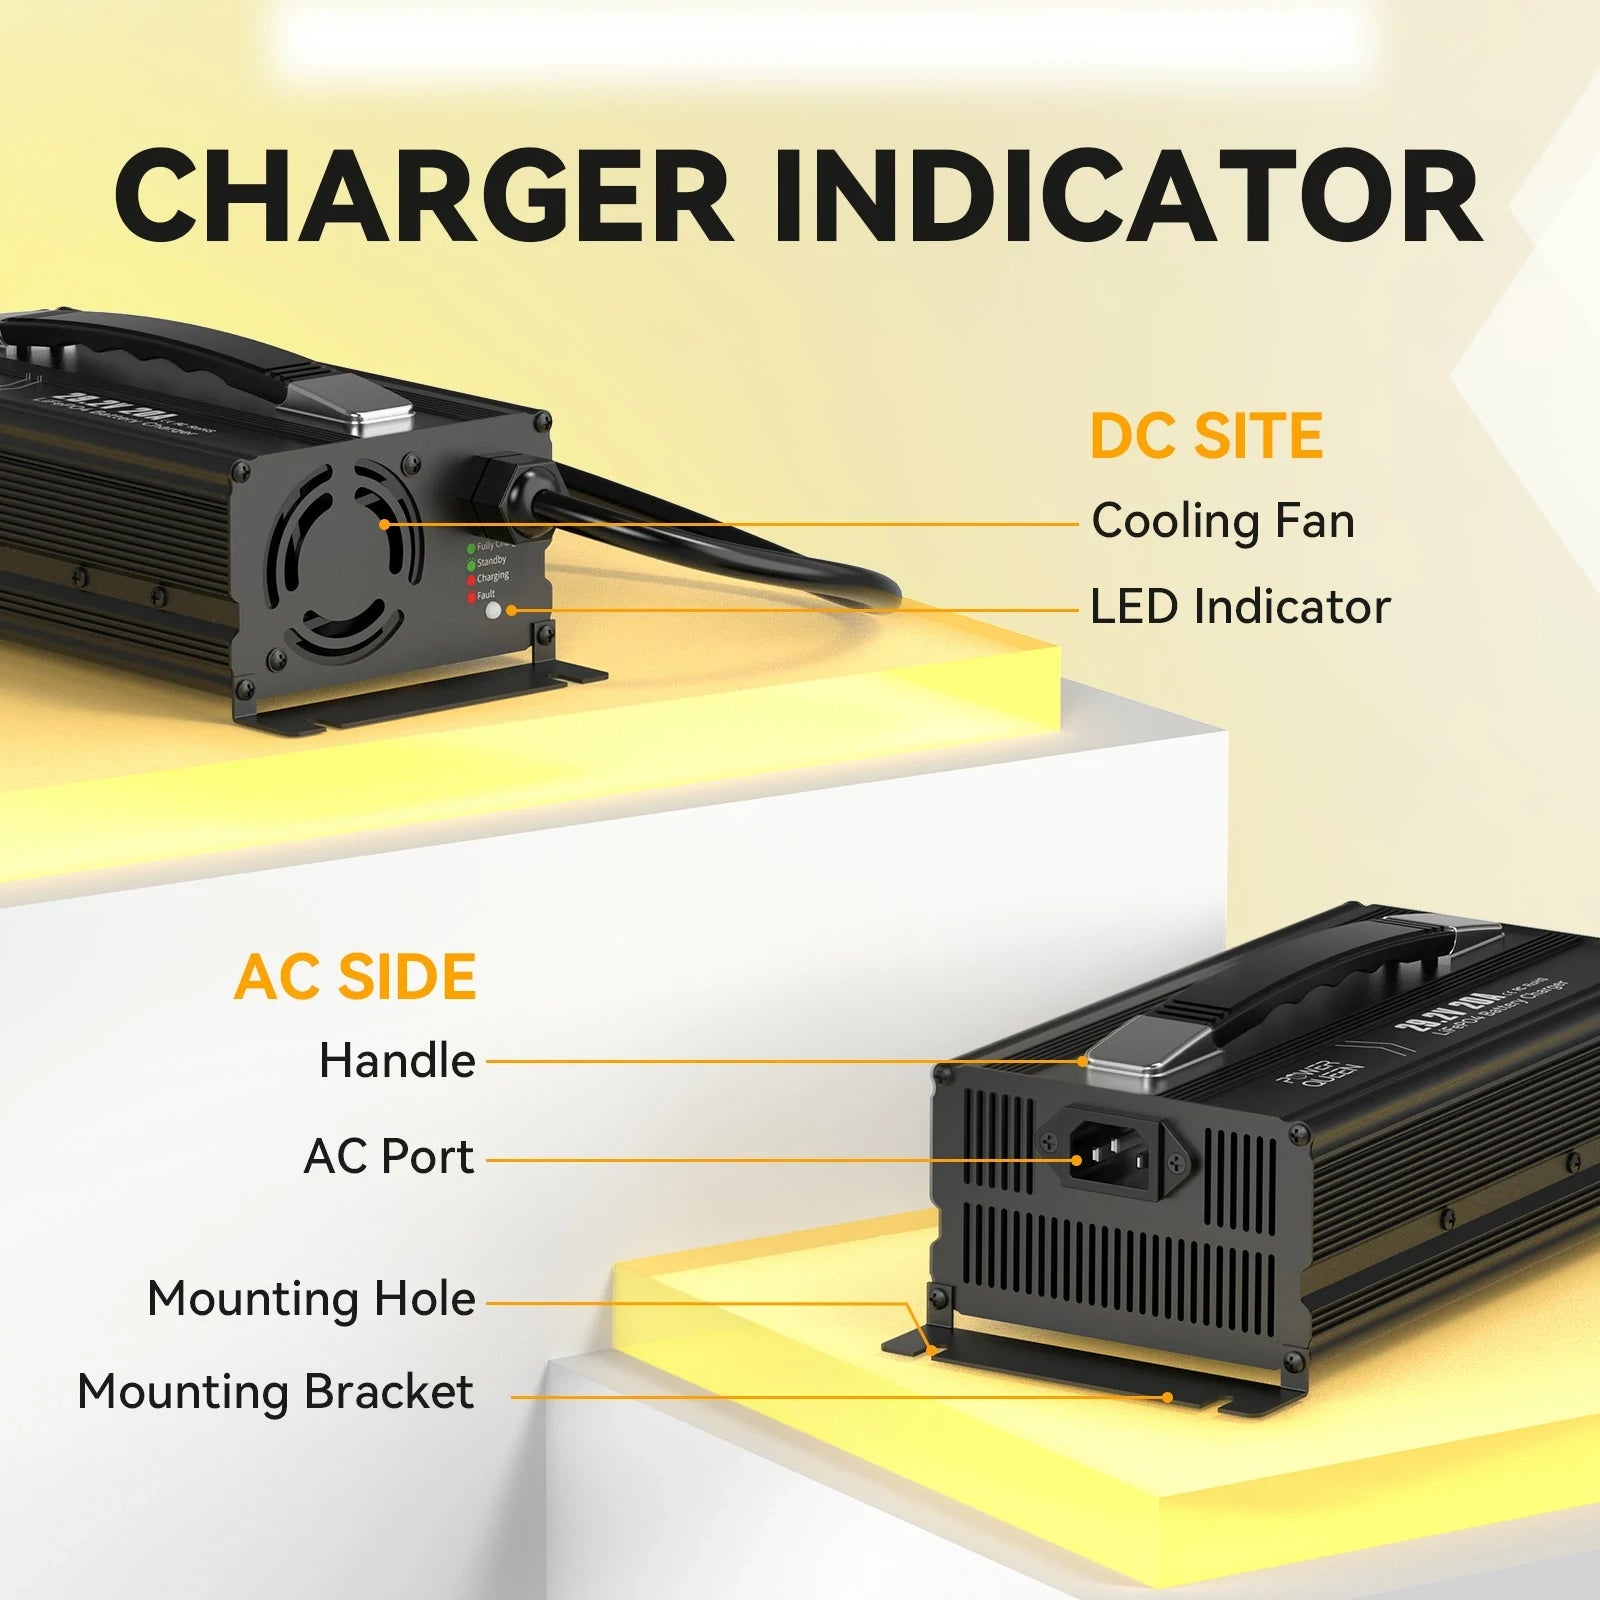 Power-Queen-details-of-24-volt-Battery-charger